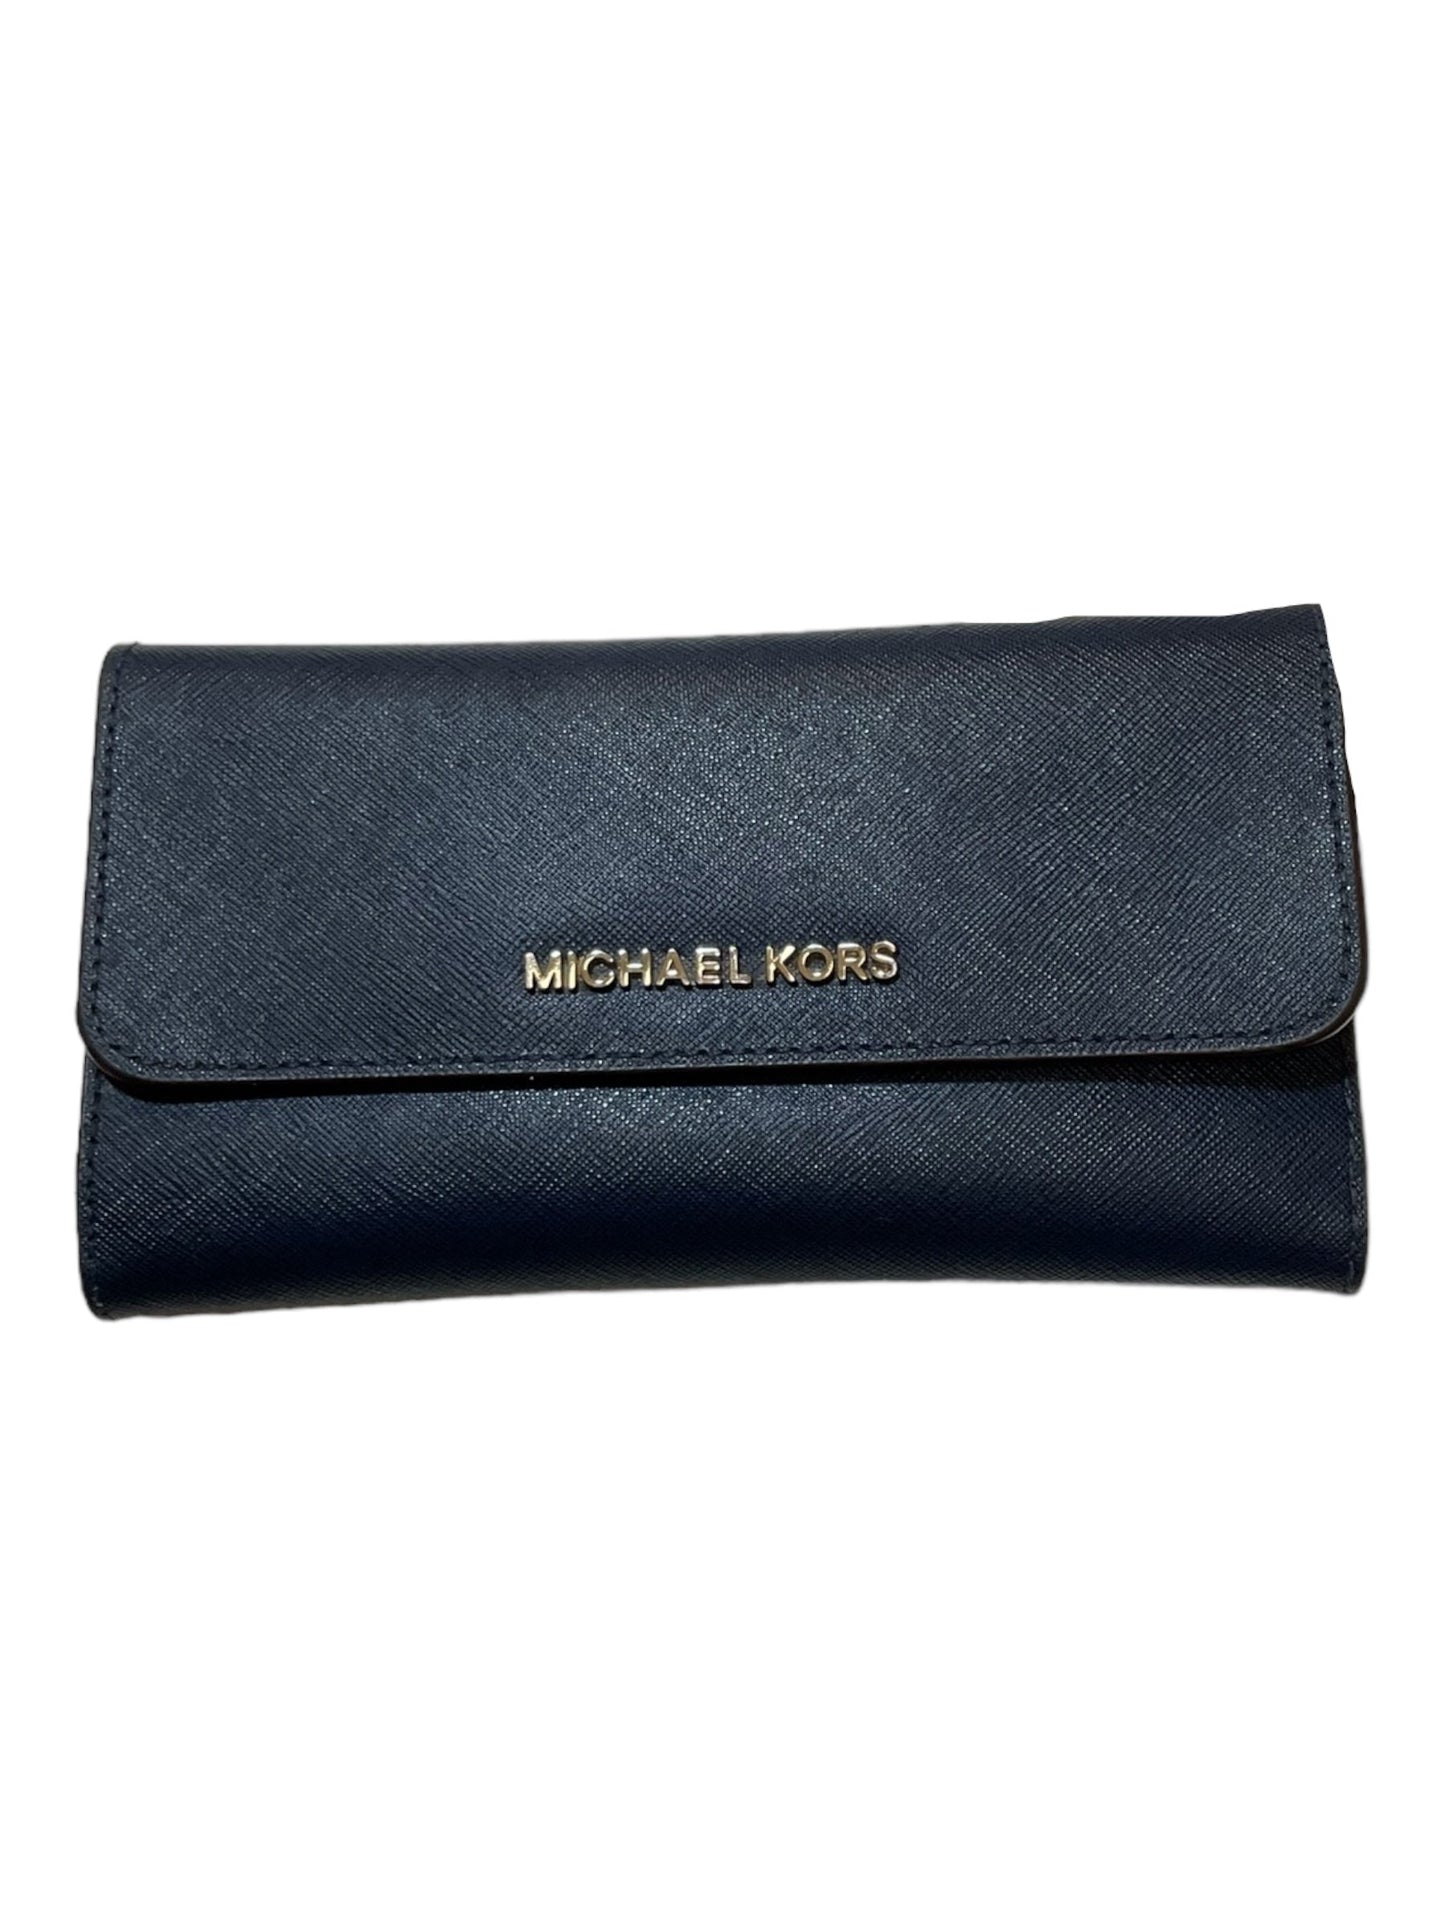 Wallet Designer Michael Kors, Size Medium